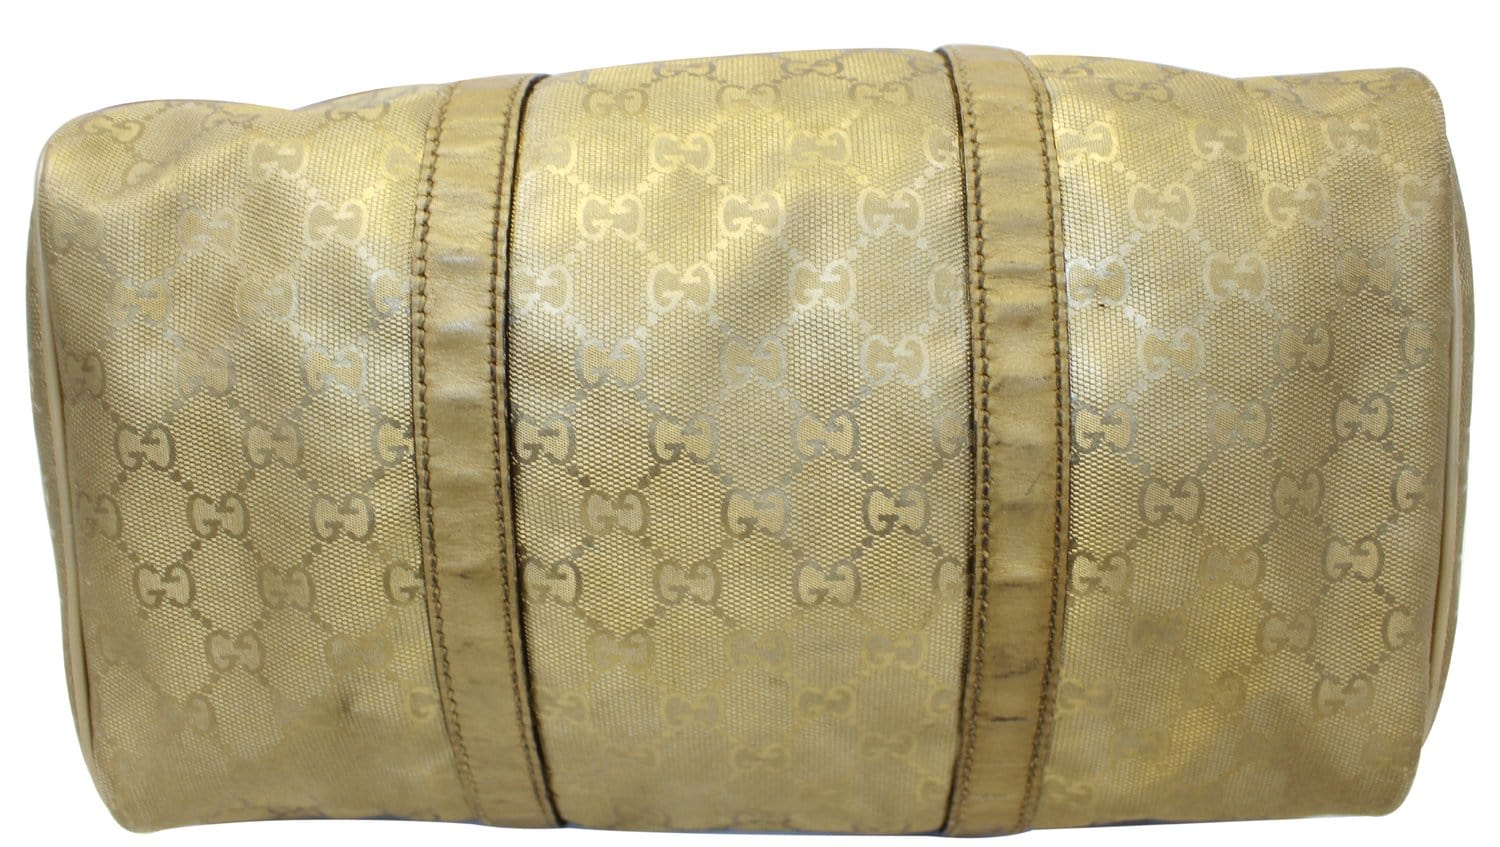 Gucci Joy GG Supreme Crystal Gold Boston Bag